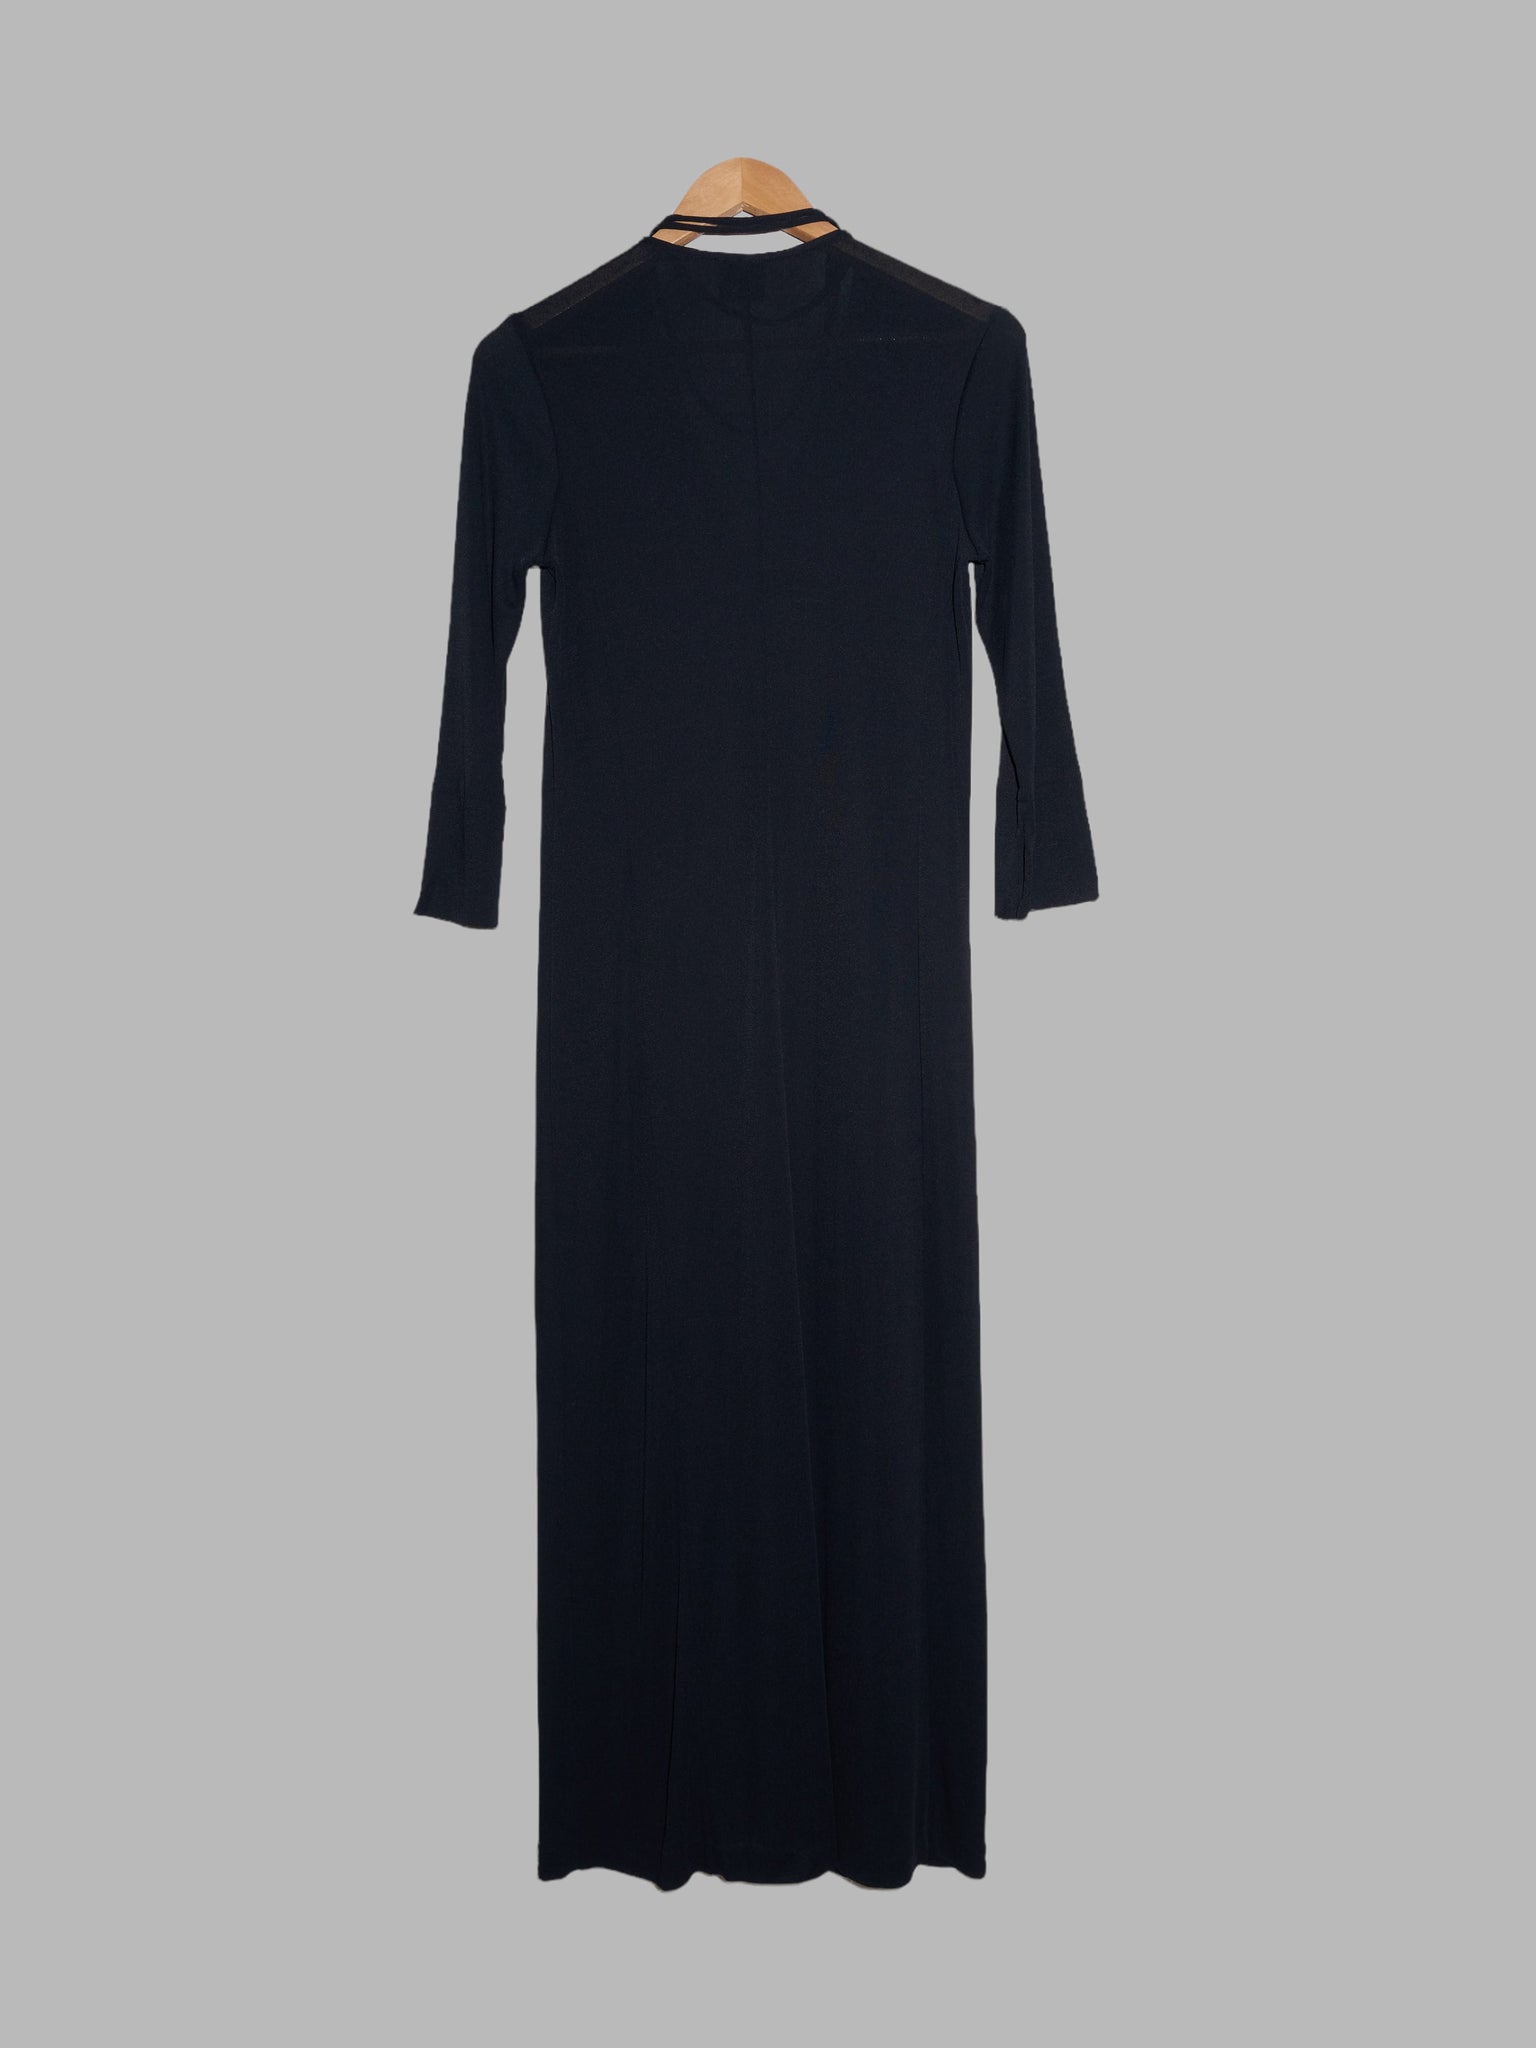 Kenzo Paris 1990s black knit v-neck maxi dress with ties